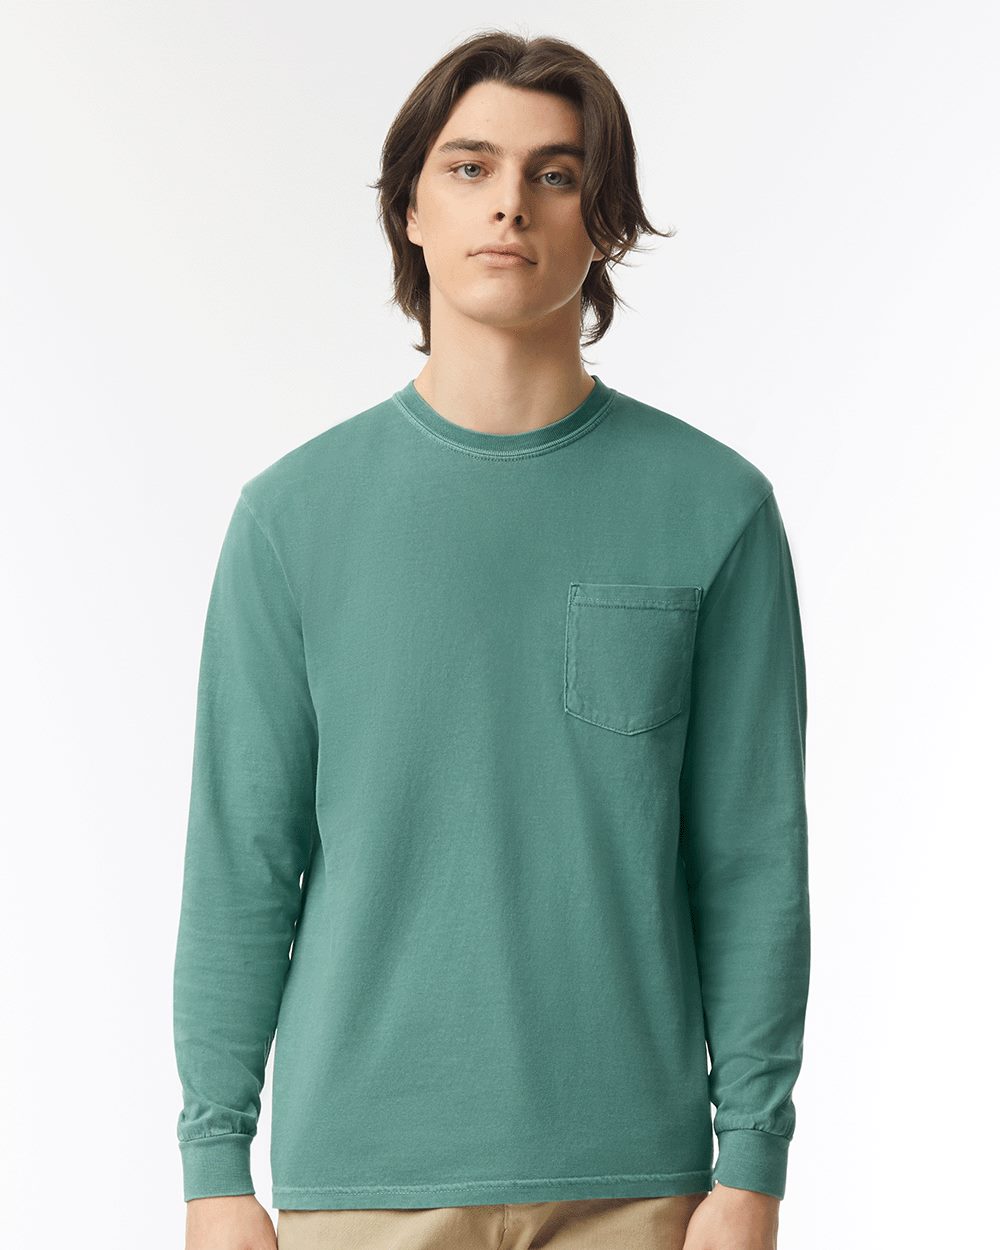 Hanes Originals Men's Garment Dyed Sweatpants with Pockets, 31